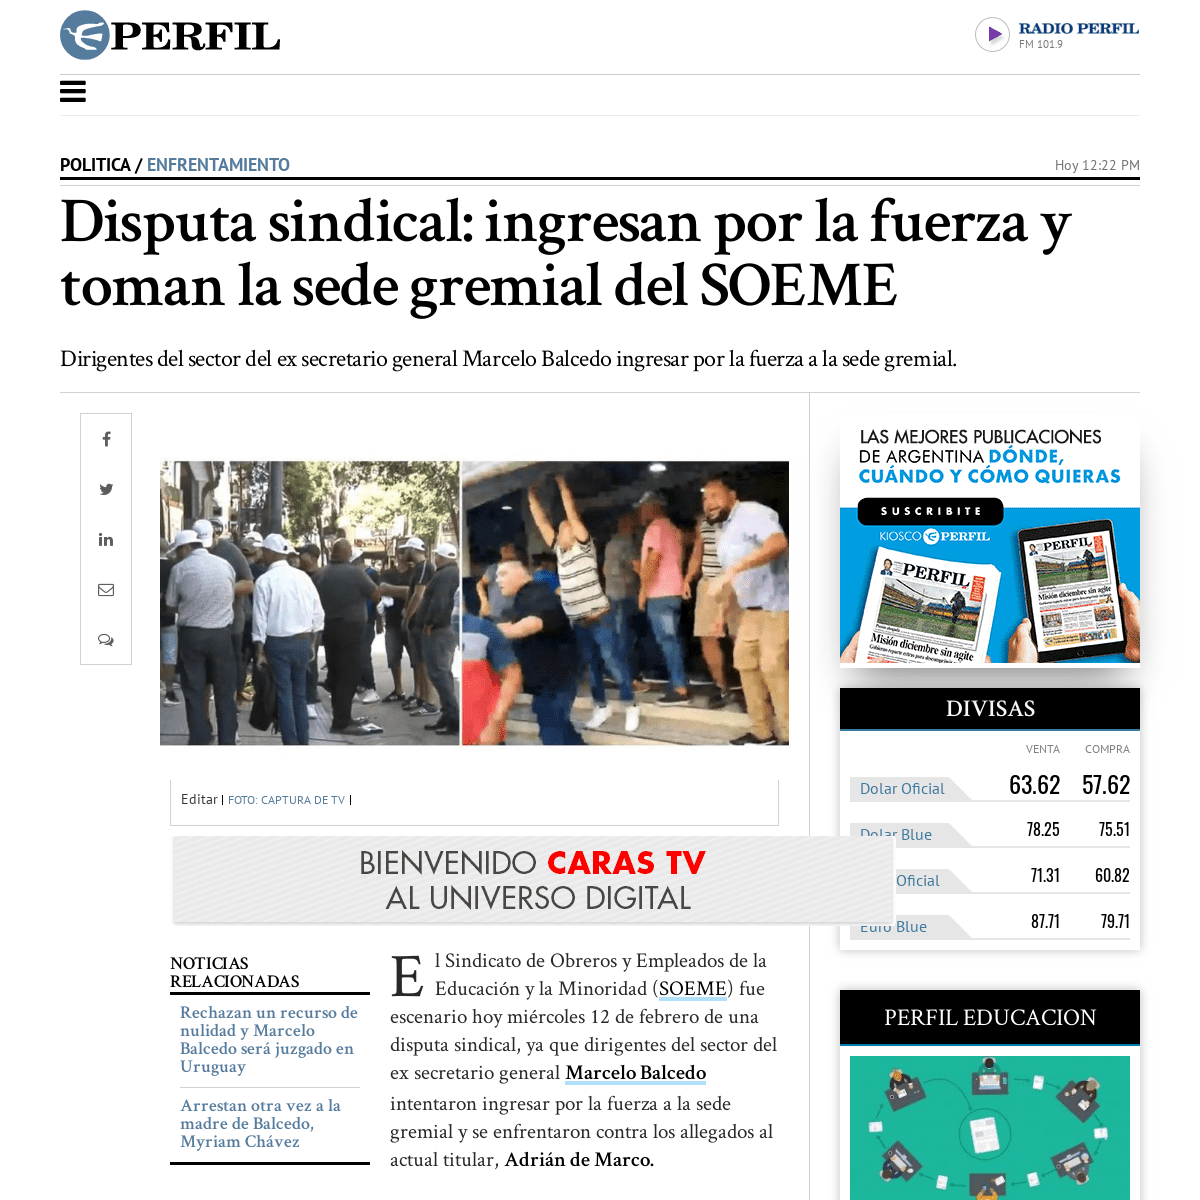 A complete backup of www.perfil.com/noticias/politica/disputa-sindical-ingresan-por-la-fuerza-toman-sede-gremial-soeme.phtml